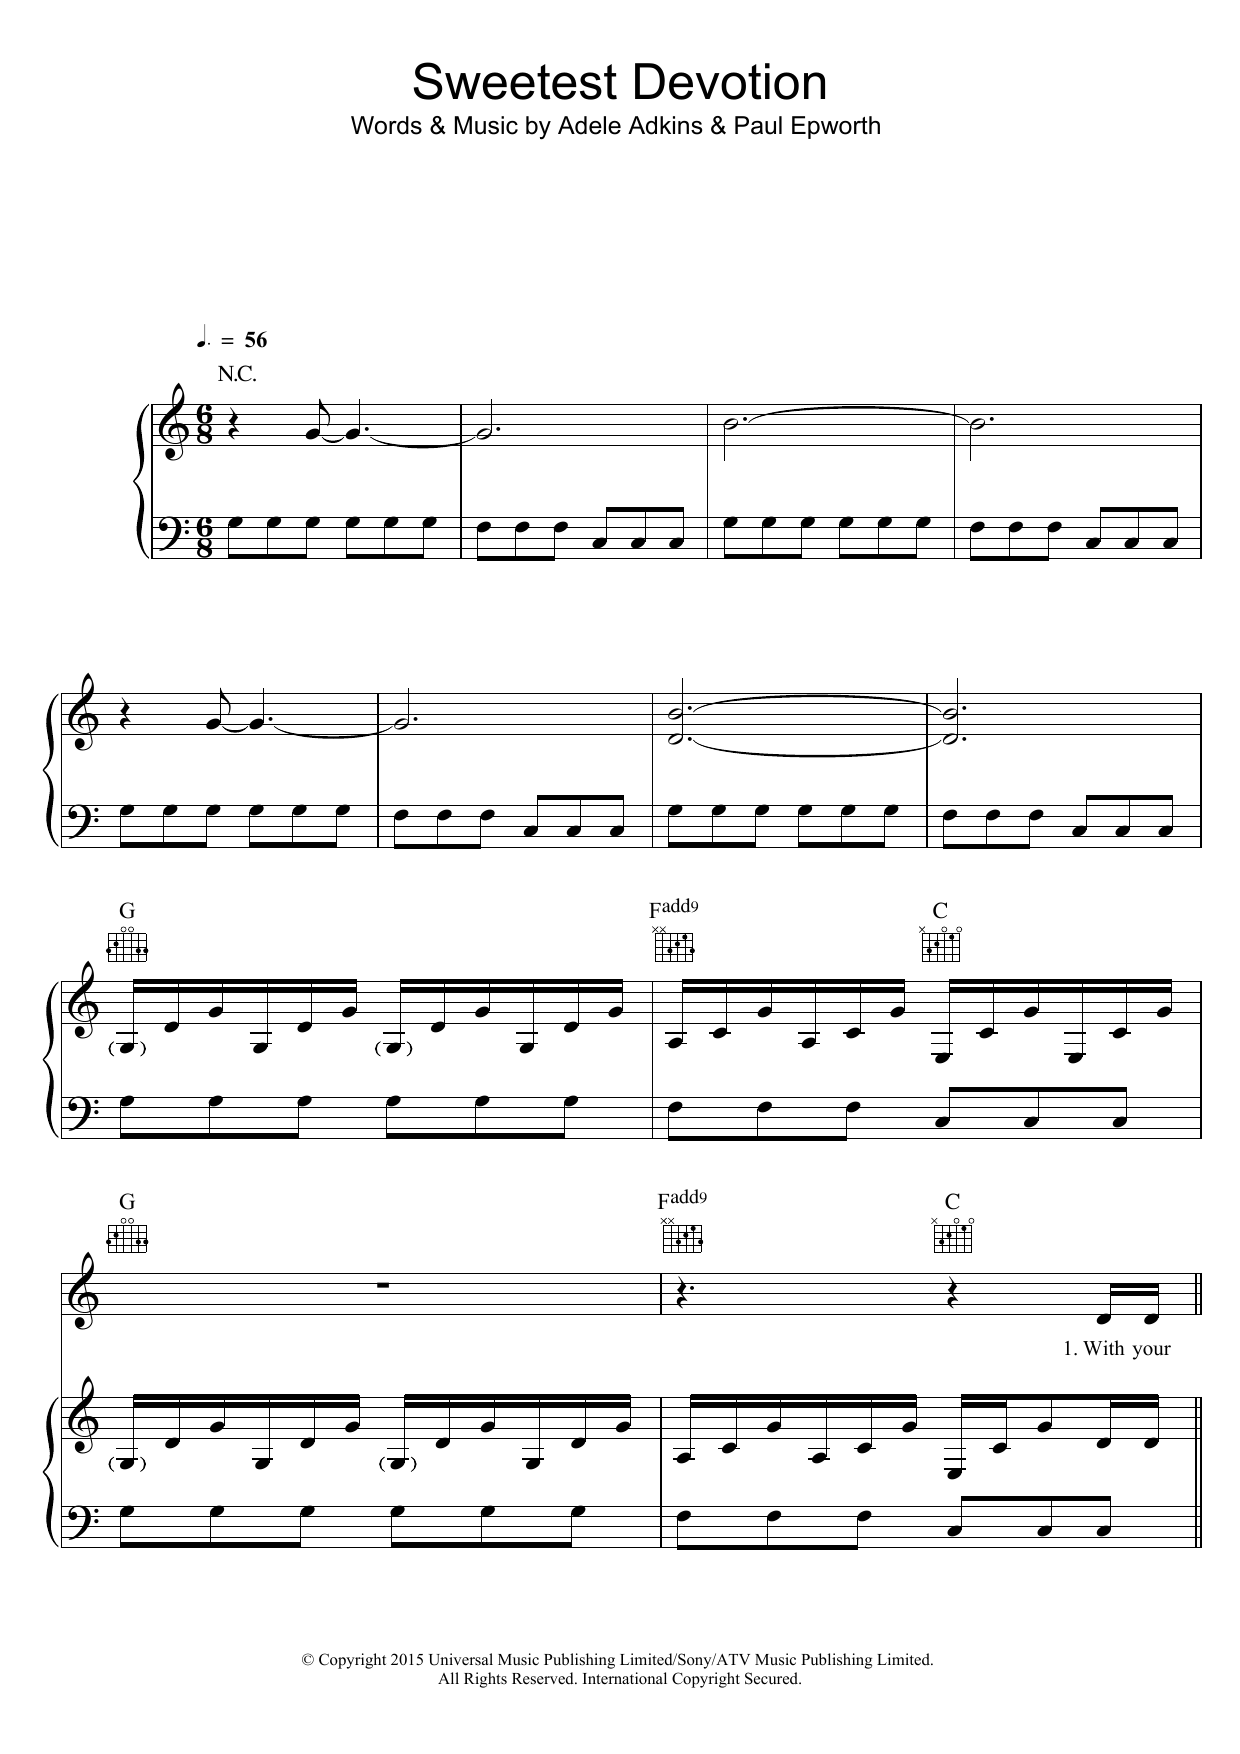 Adele Sweetest Devotion Sheet Music Notes & Chords for Ukulele - Download or Print PDF